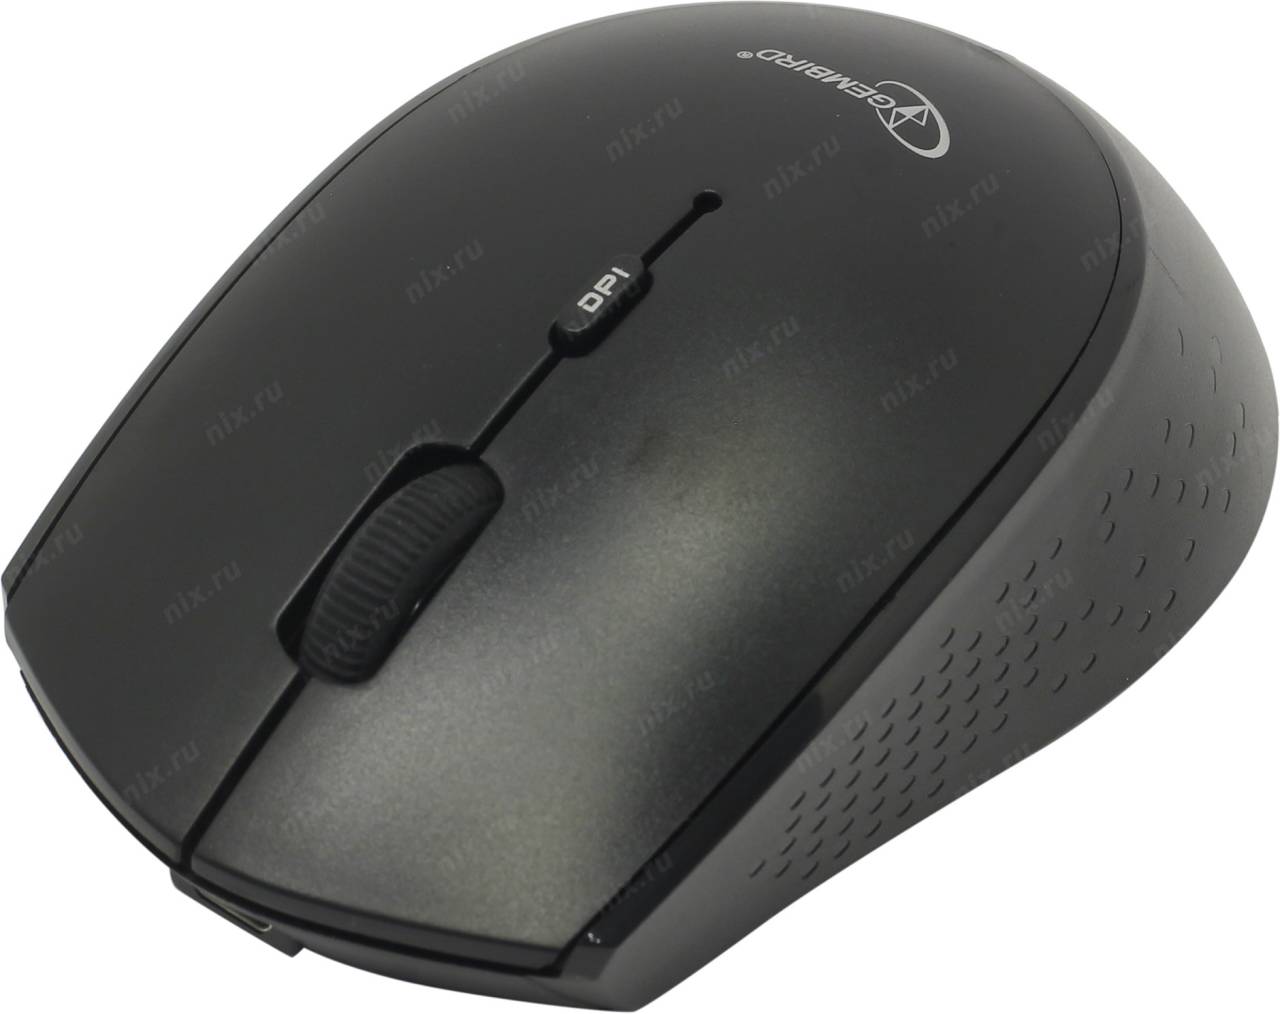   USB Gembird Wireless Optical Mouse [MUSW-351] (RTL) 4.( )